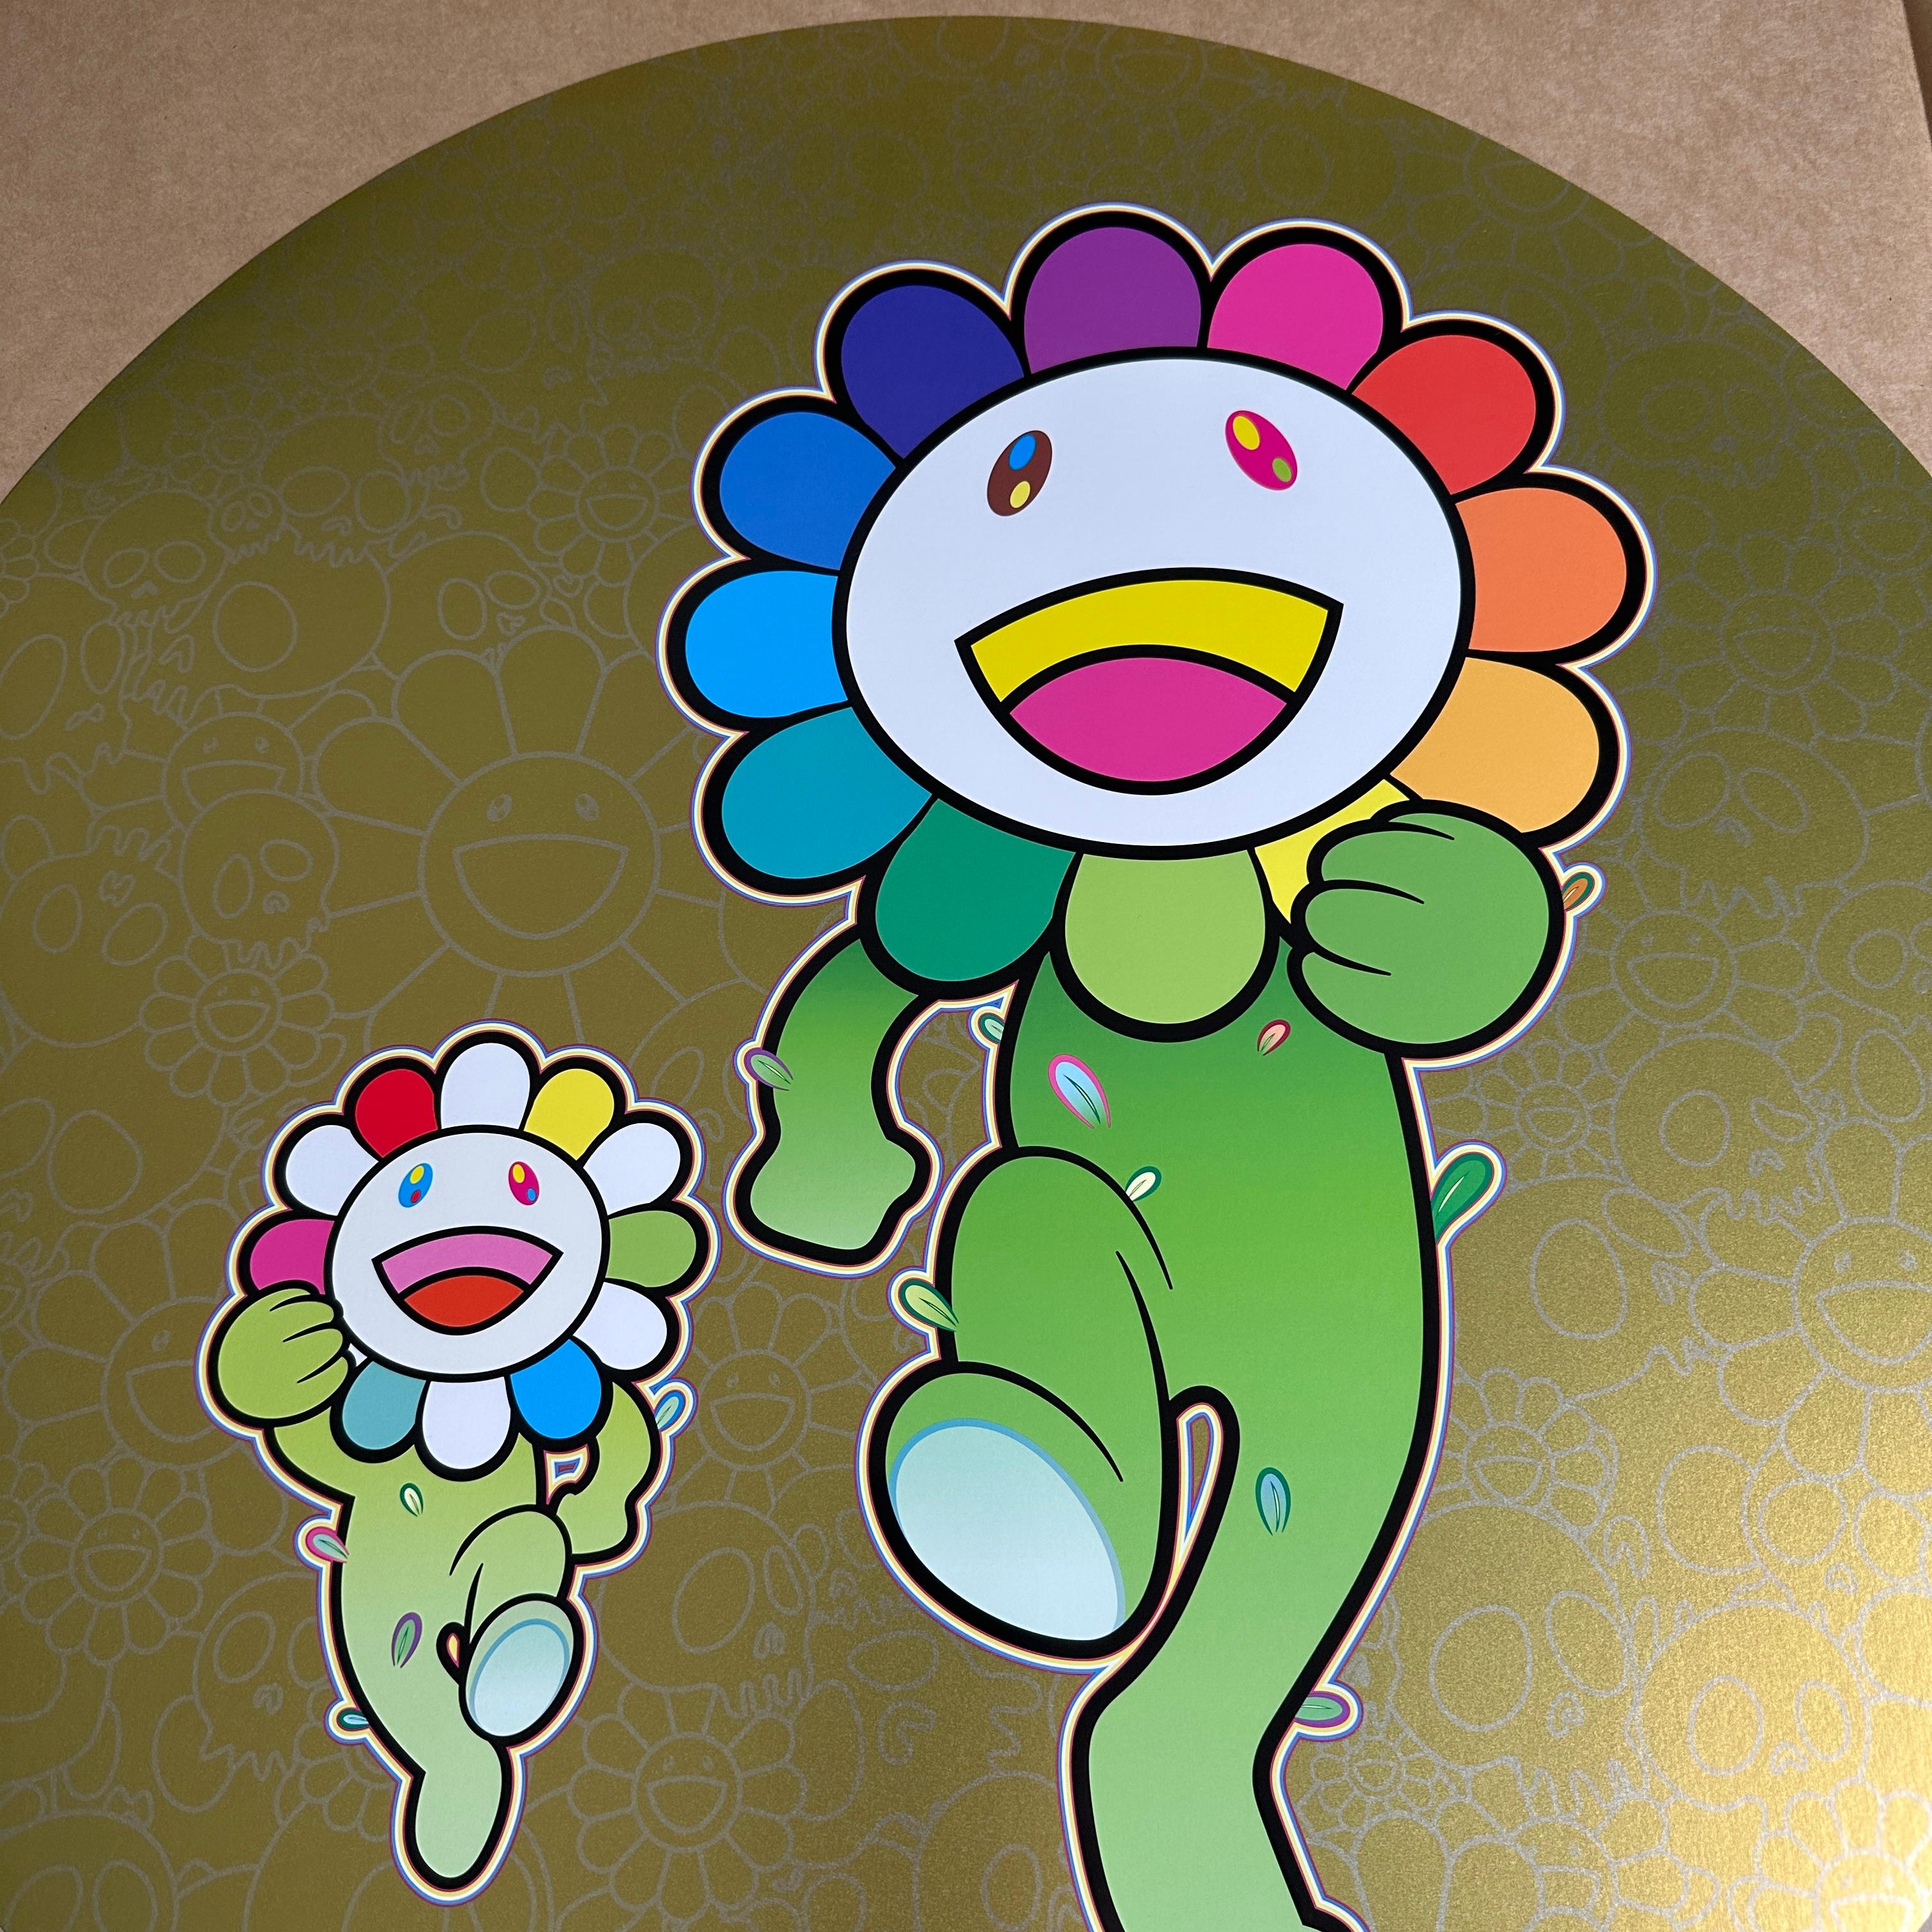 Flower Parent and Child, Rum Pum Pum! (Takashi Murakami, Gold, flowers, Japan) For Sale 4